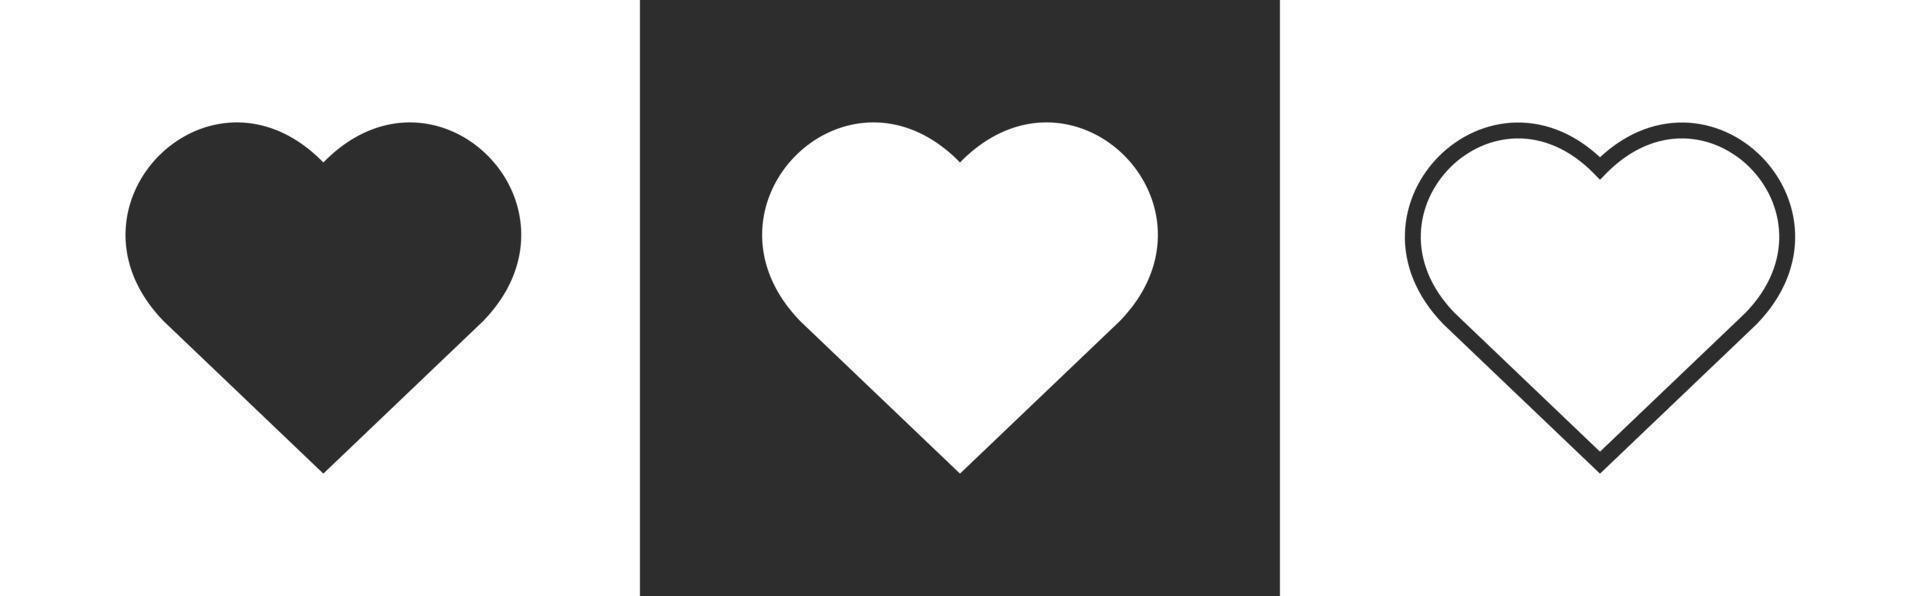 Heart Icon Flat Black White Stroke Variations Vector Illustration